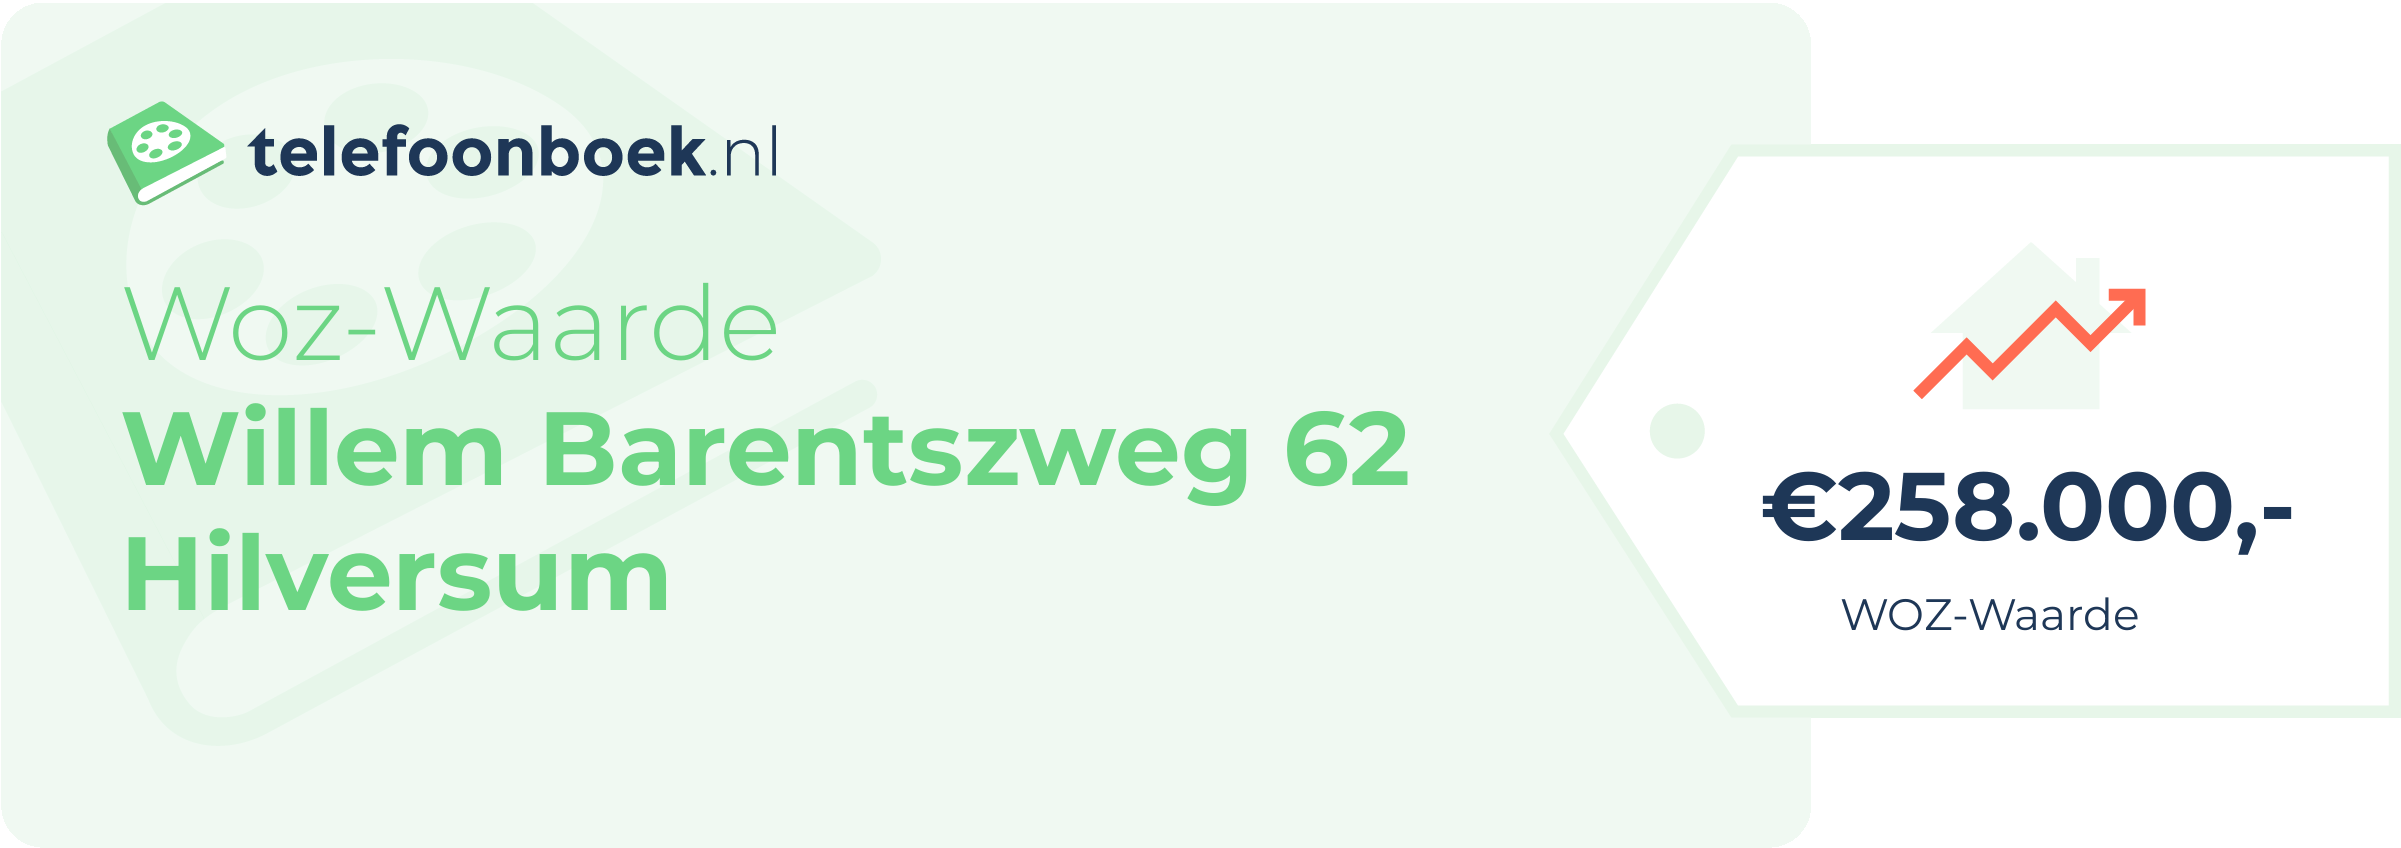 WOZ-waarde Willem Barentszweg 62 Hilversum